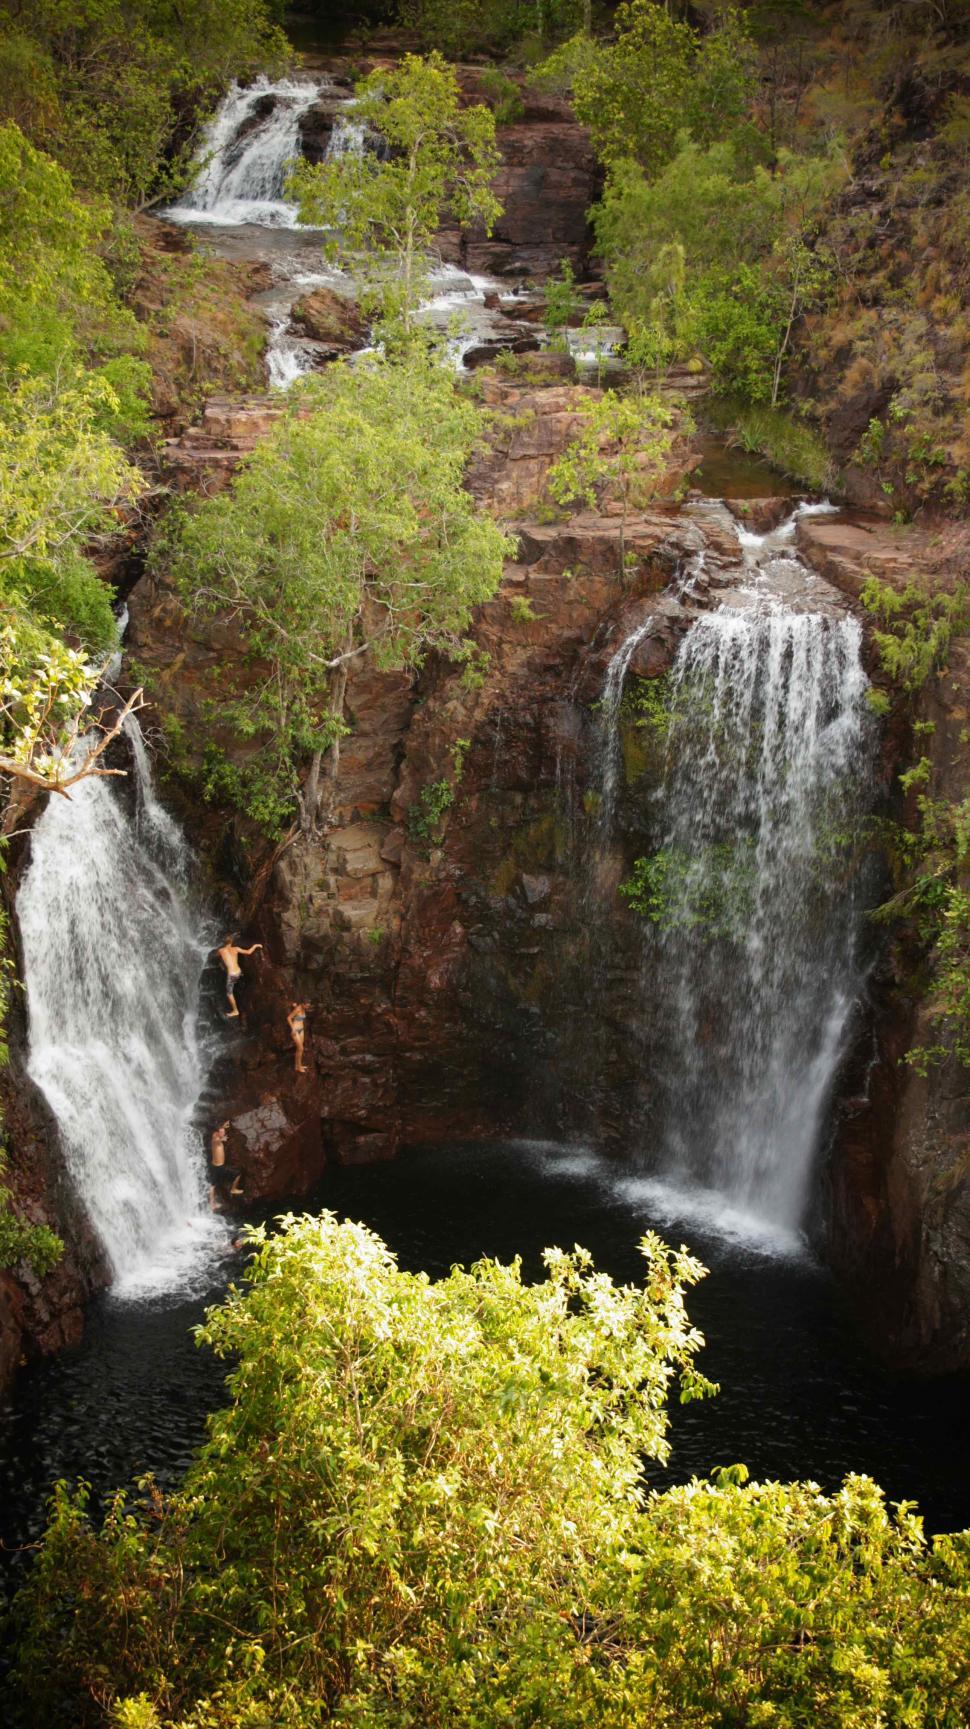 Free Image of Water Falls through an Australian Canyon 